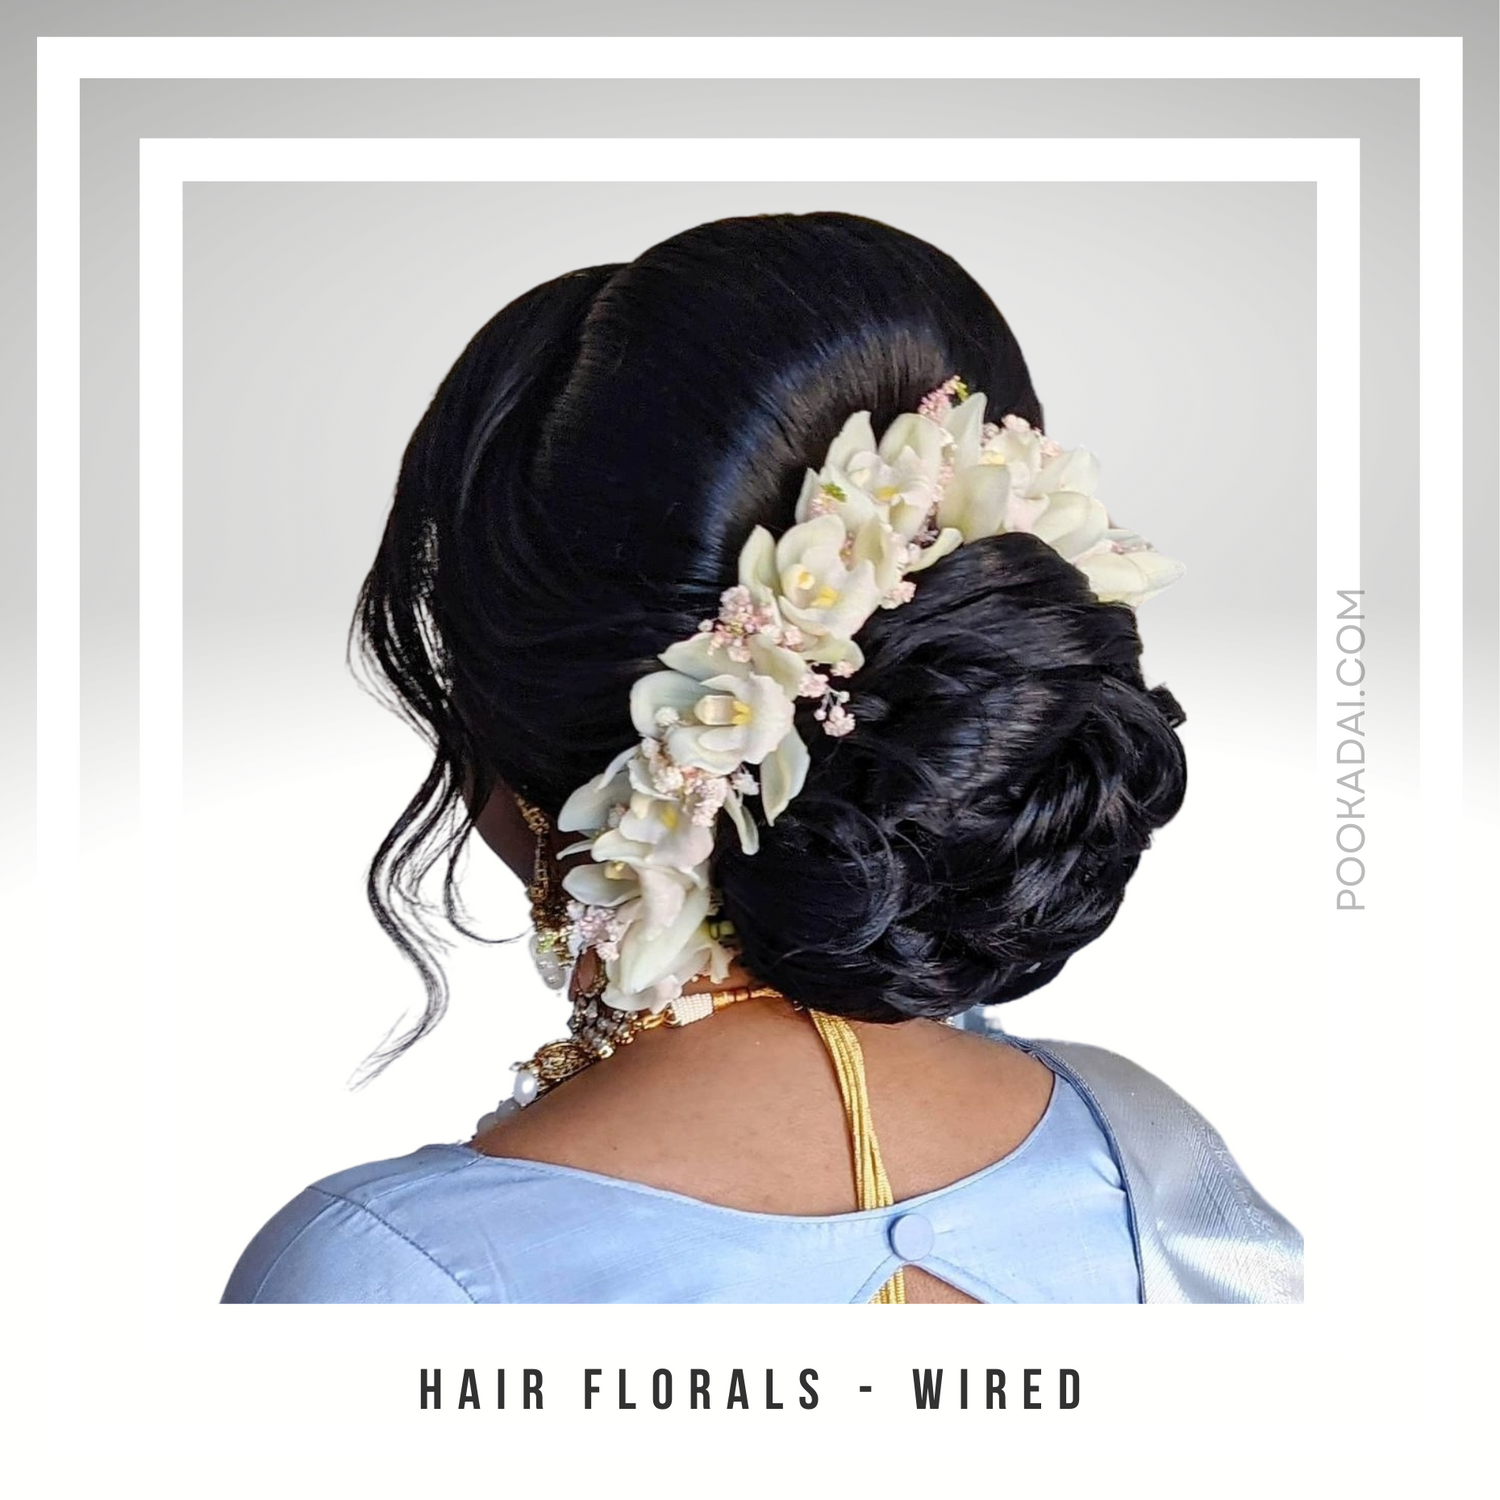 Hair Florals - Wired